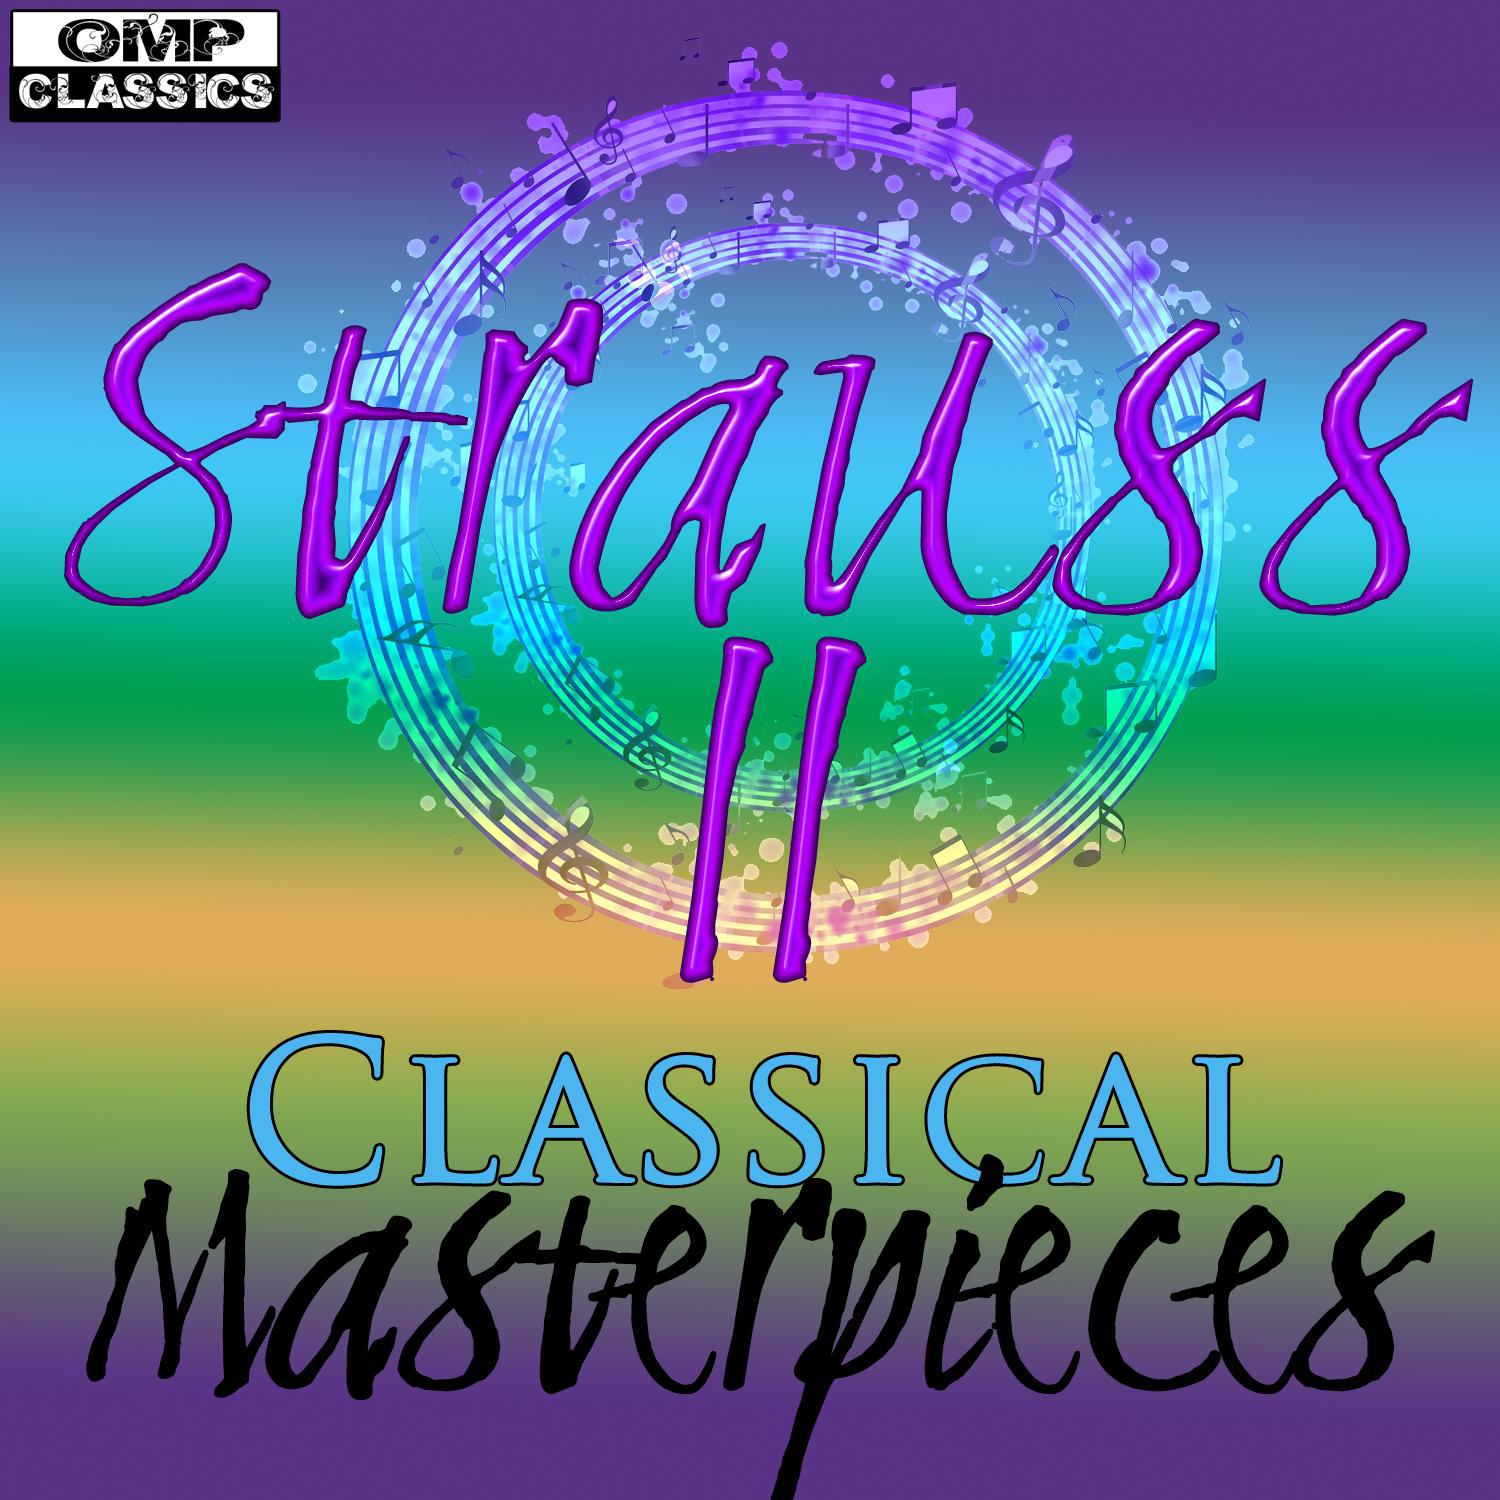 Johann Strauss II: Classical Masterpieces